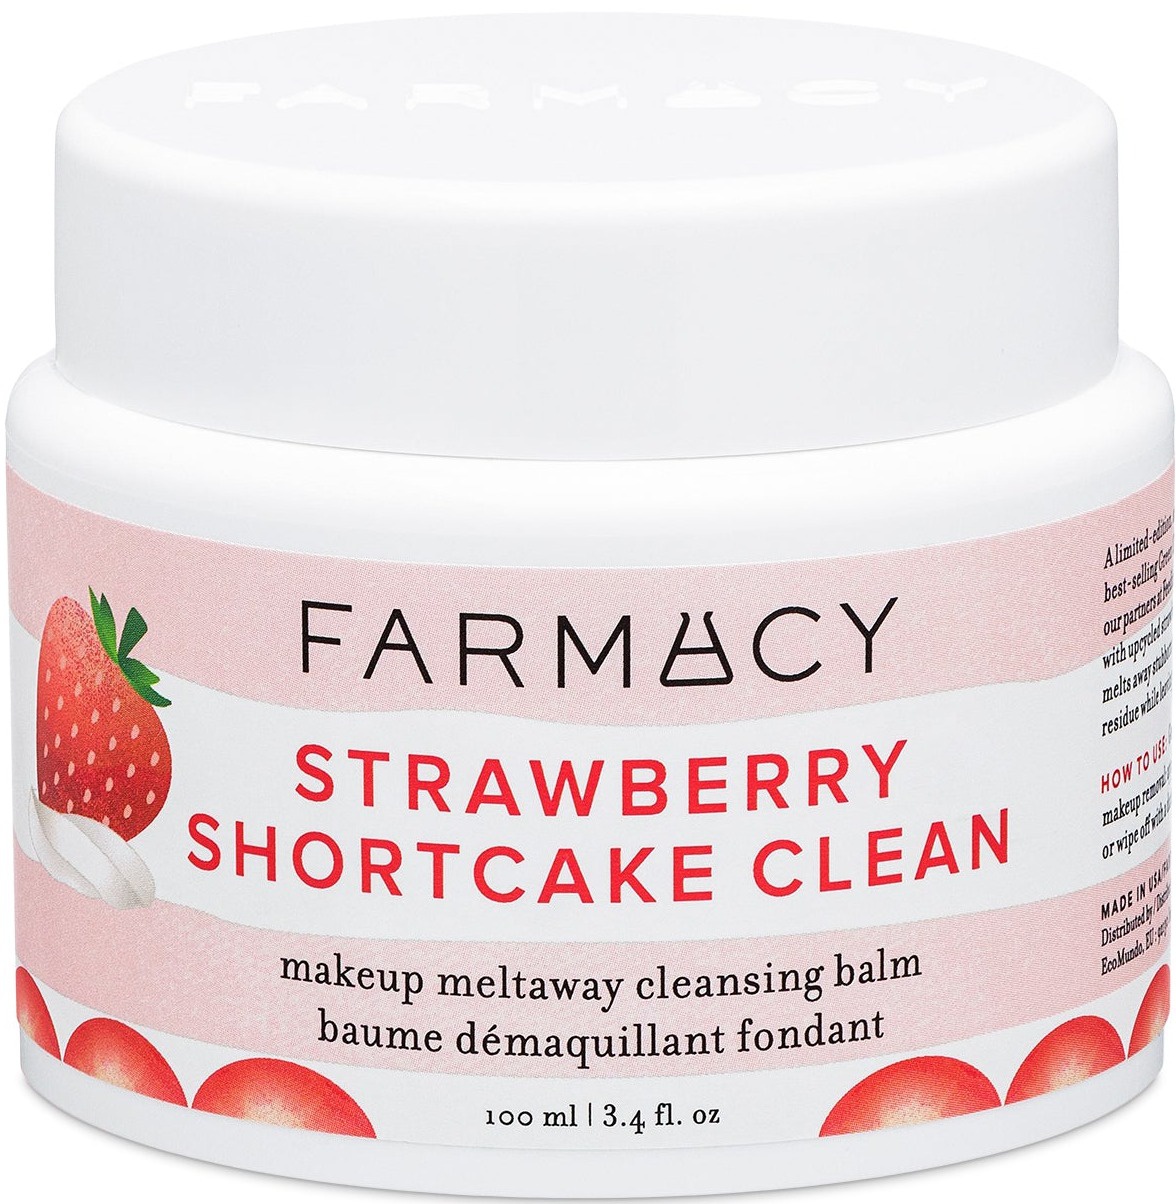 Farmacy Strawberry Shortcake Cleansing Balm